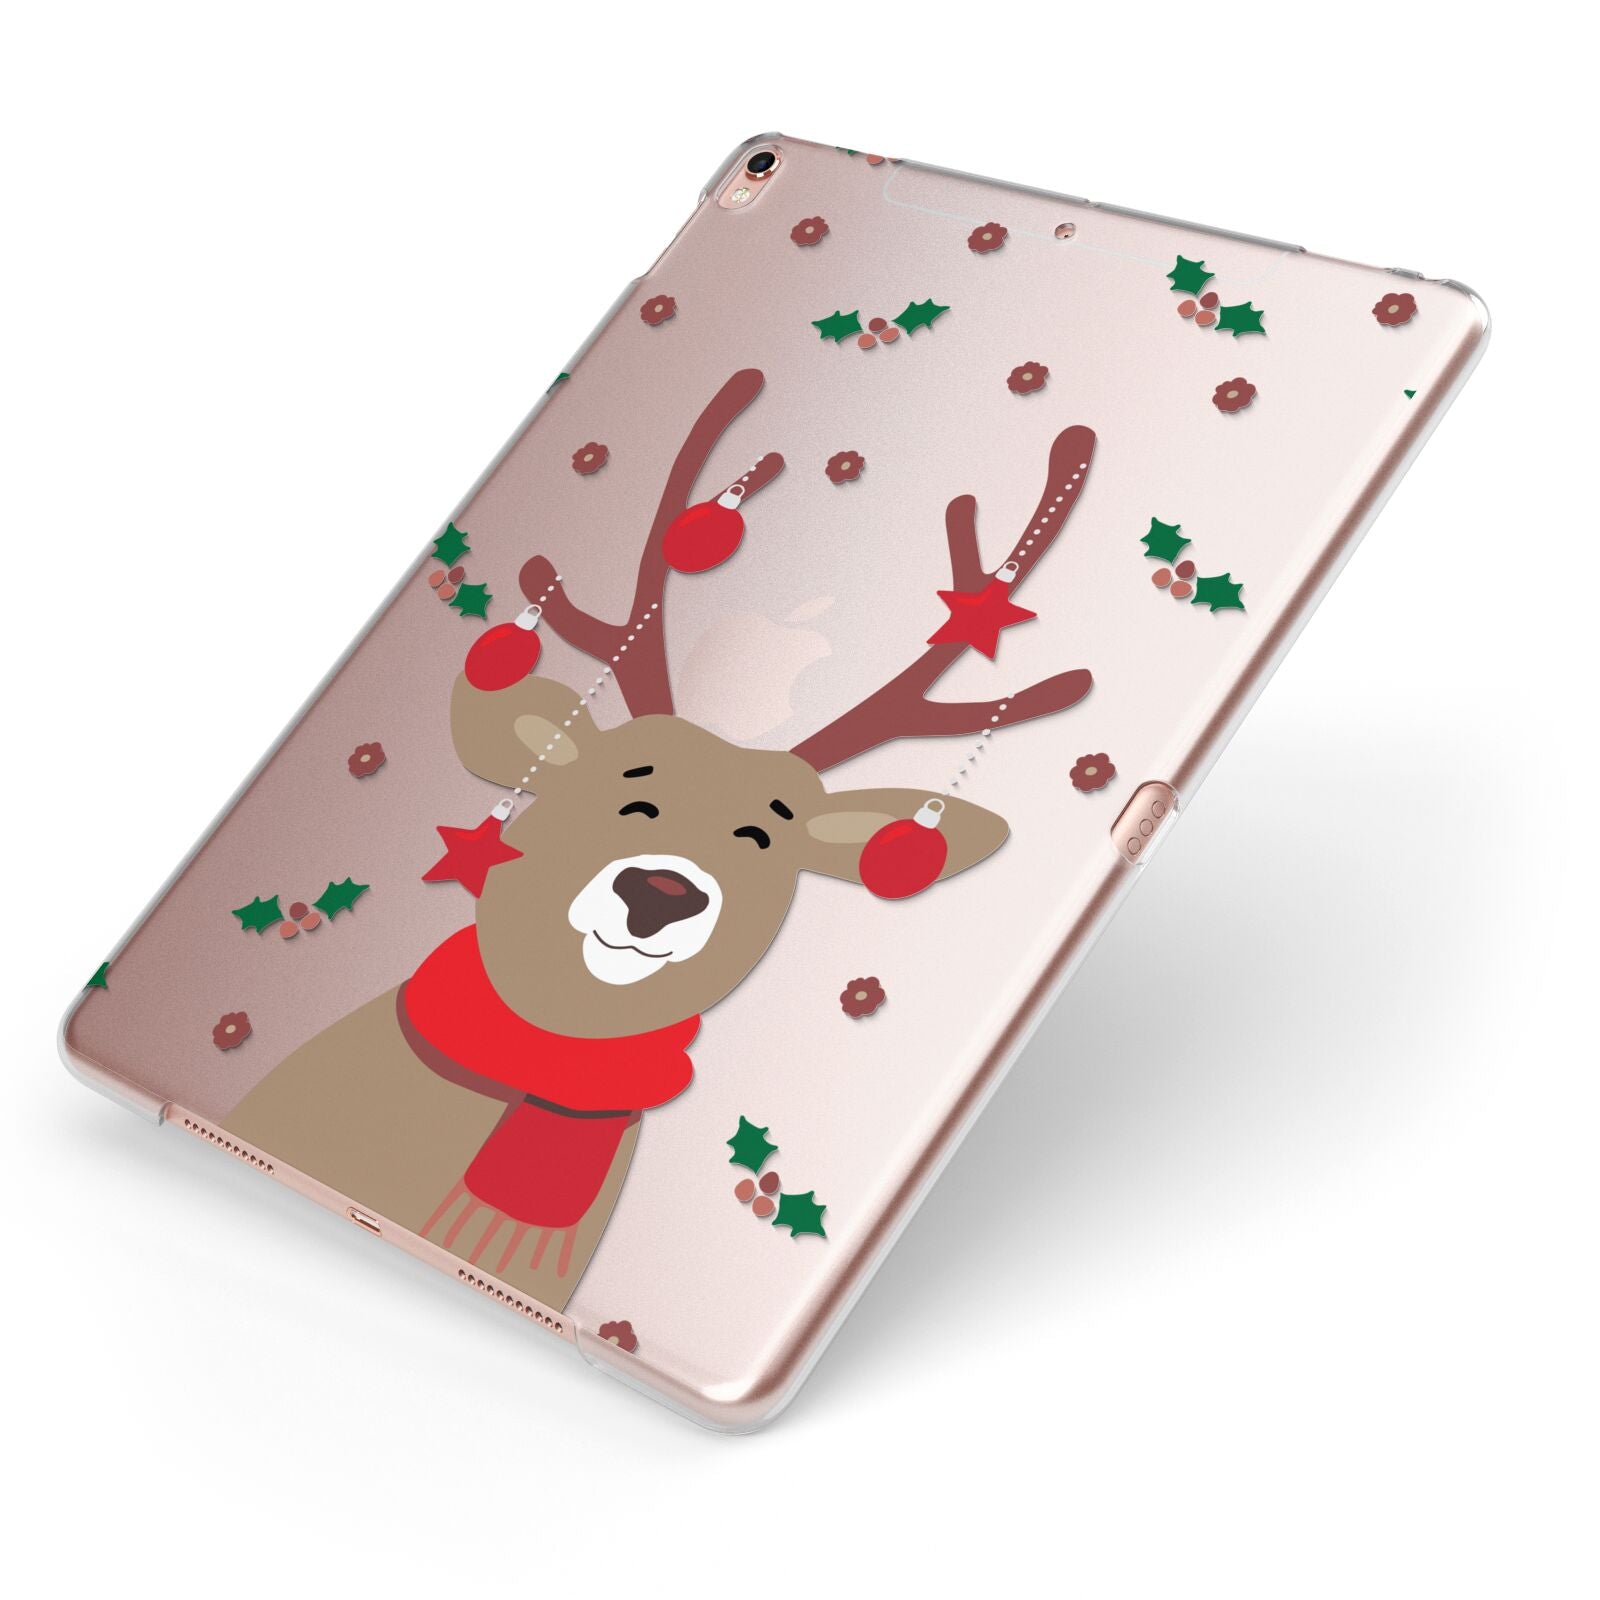 Reindeer Christmas Apple iPad Case on Rose Gold iPad Side View